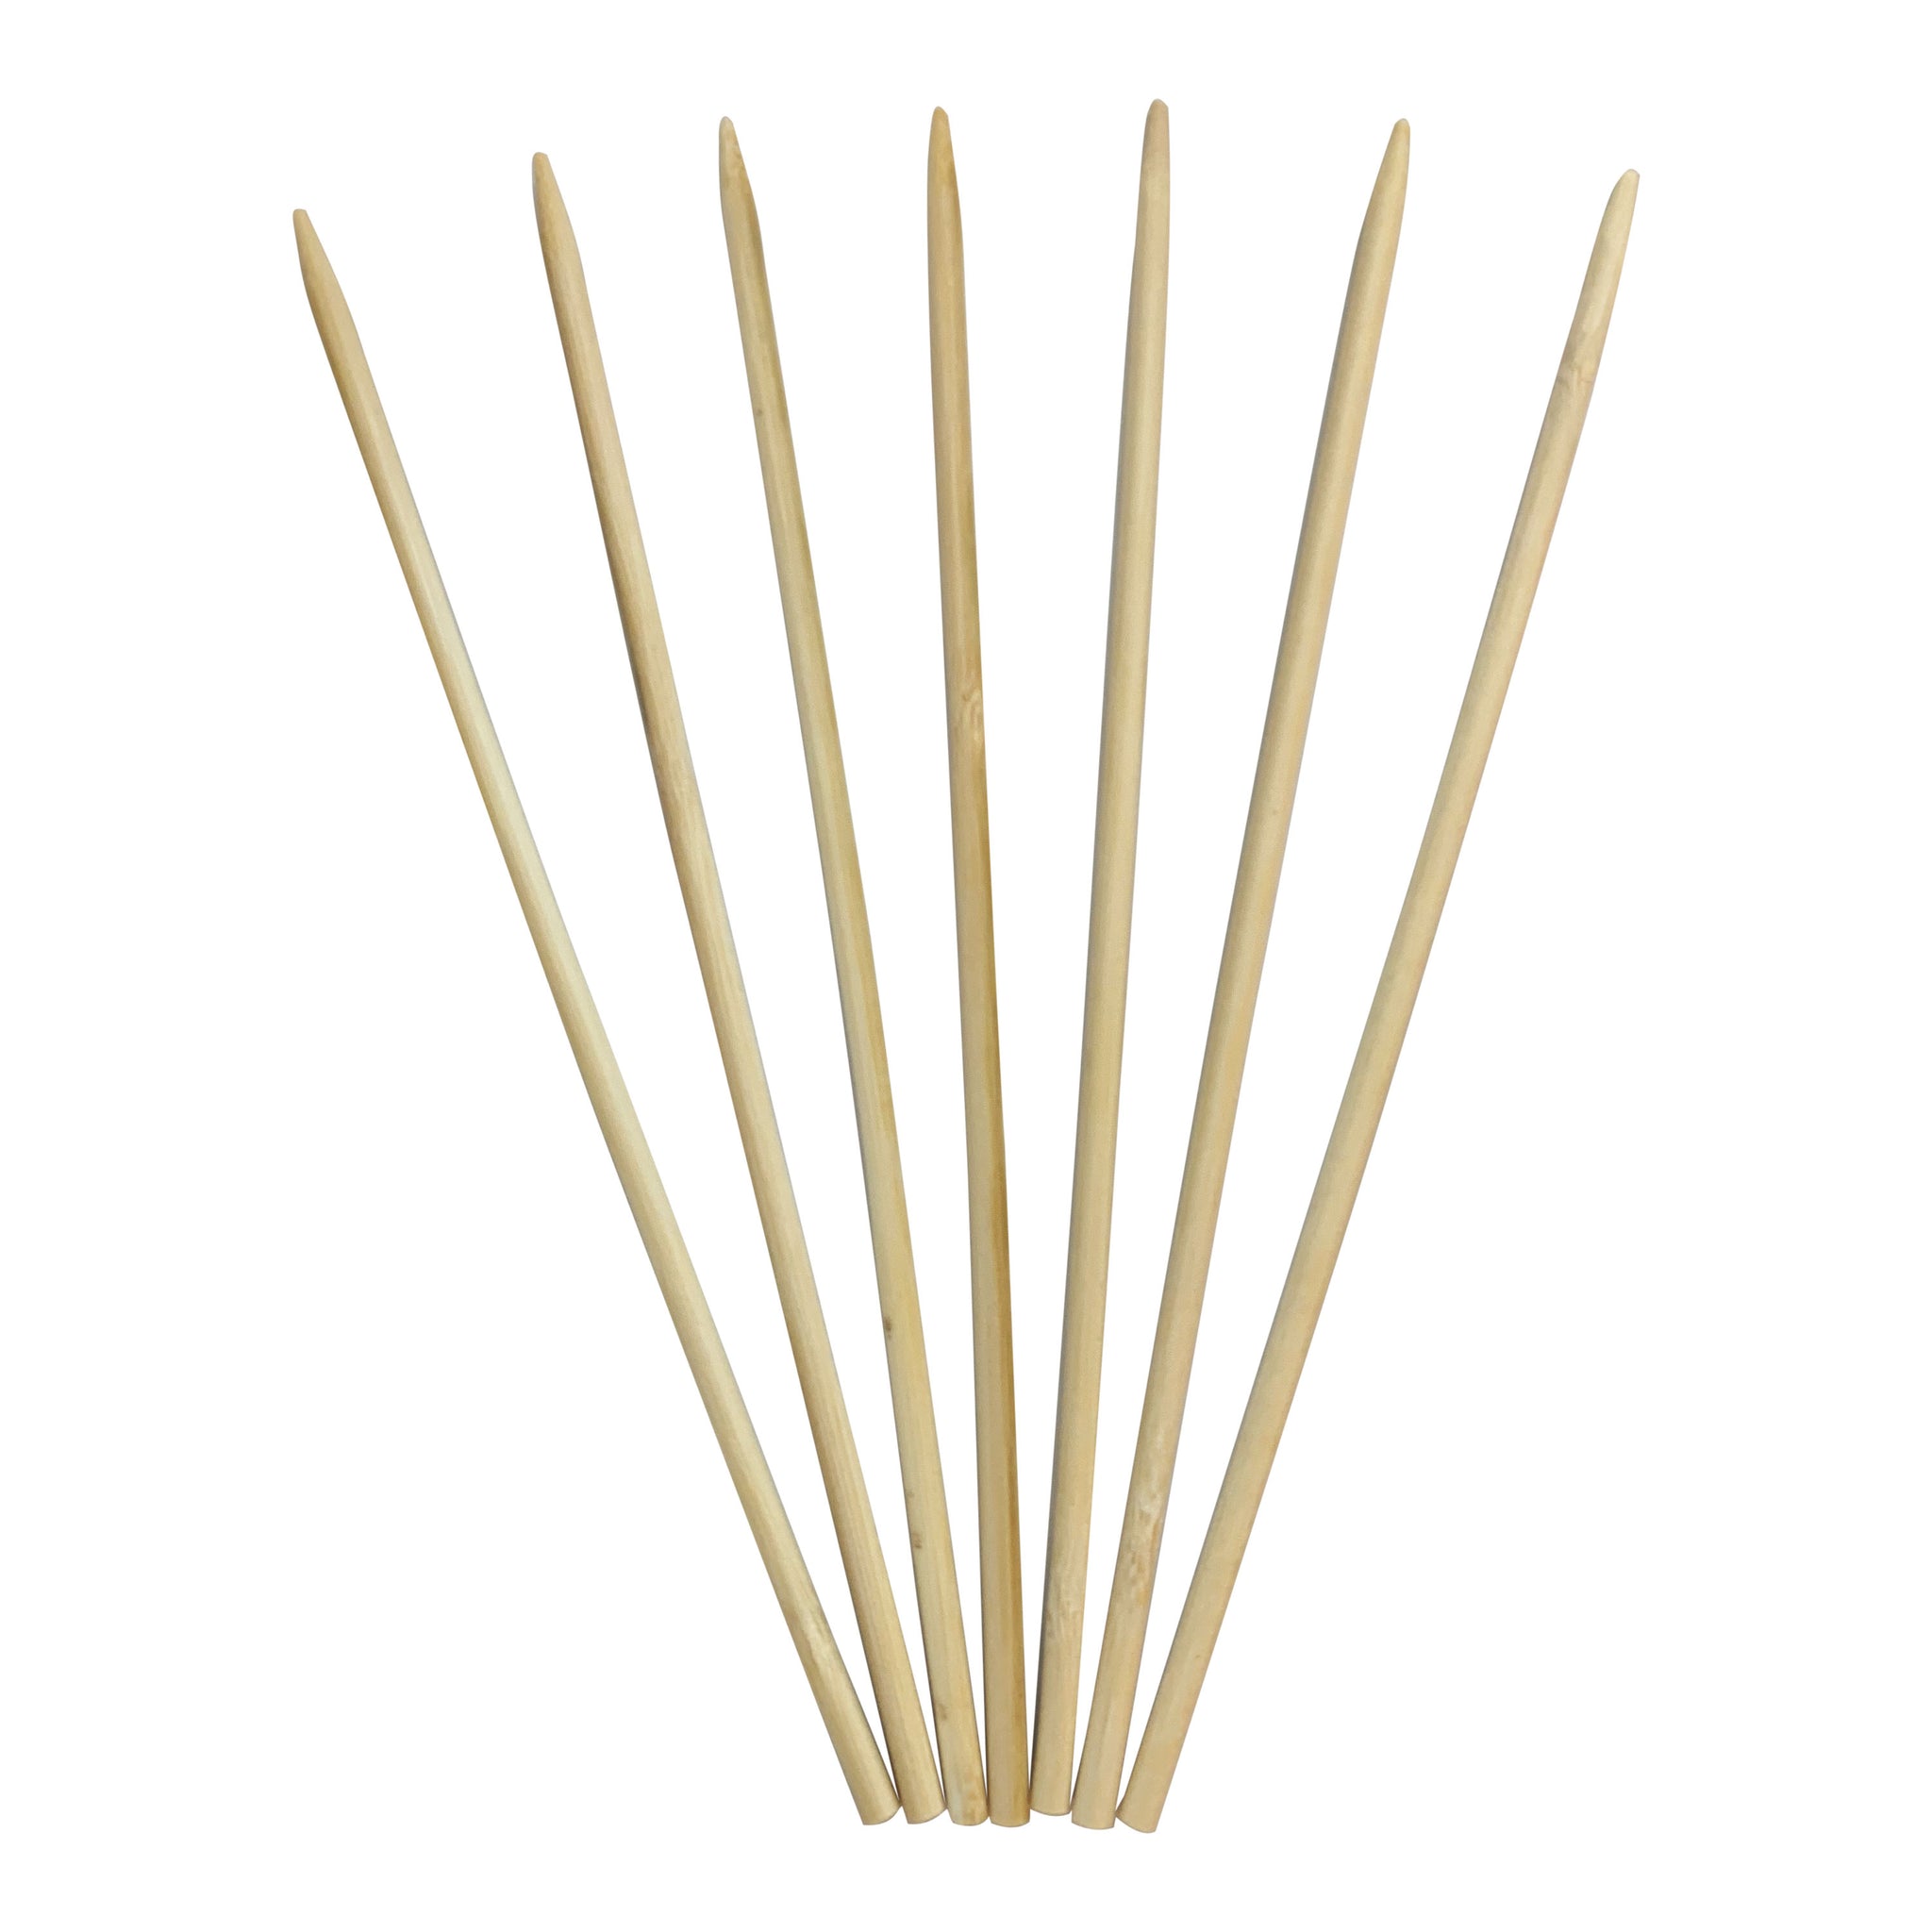 KingSeal Renewable Bamboo Wood Corn Dog Skewers, Sticks, 8.75 Inches ...